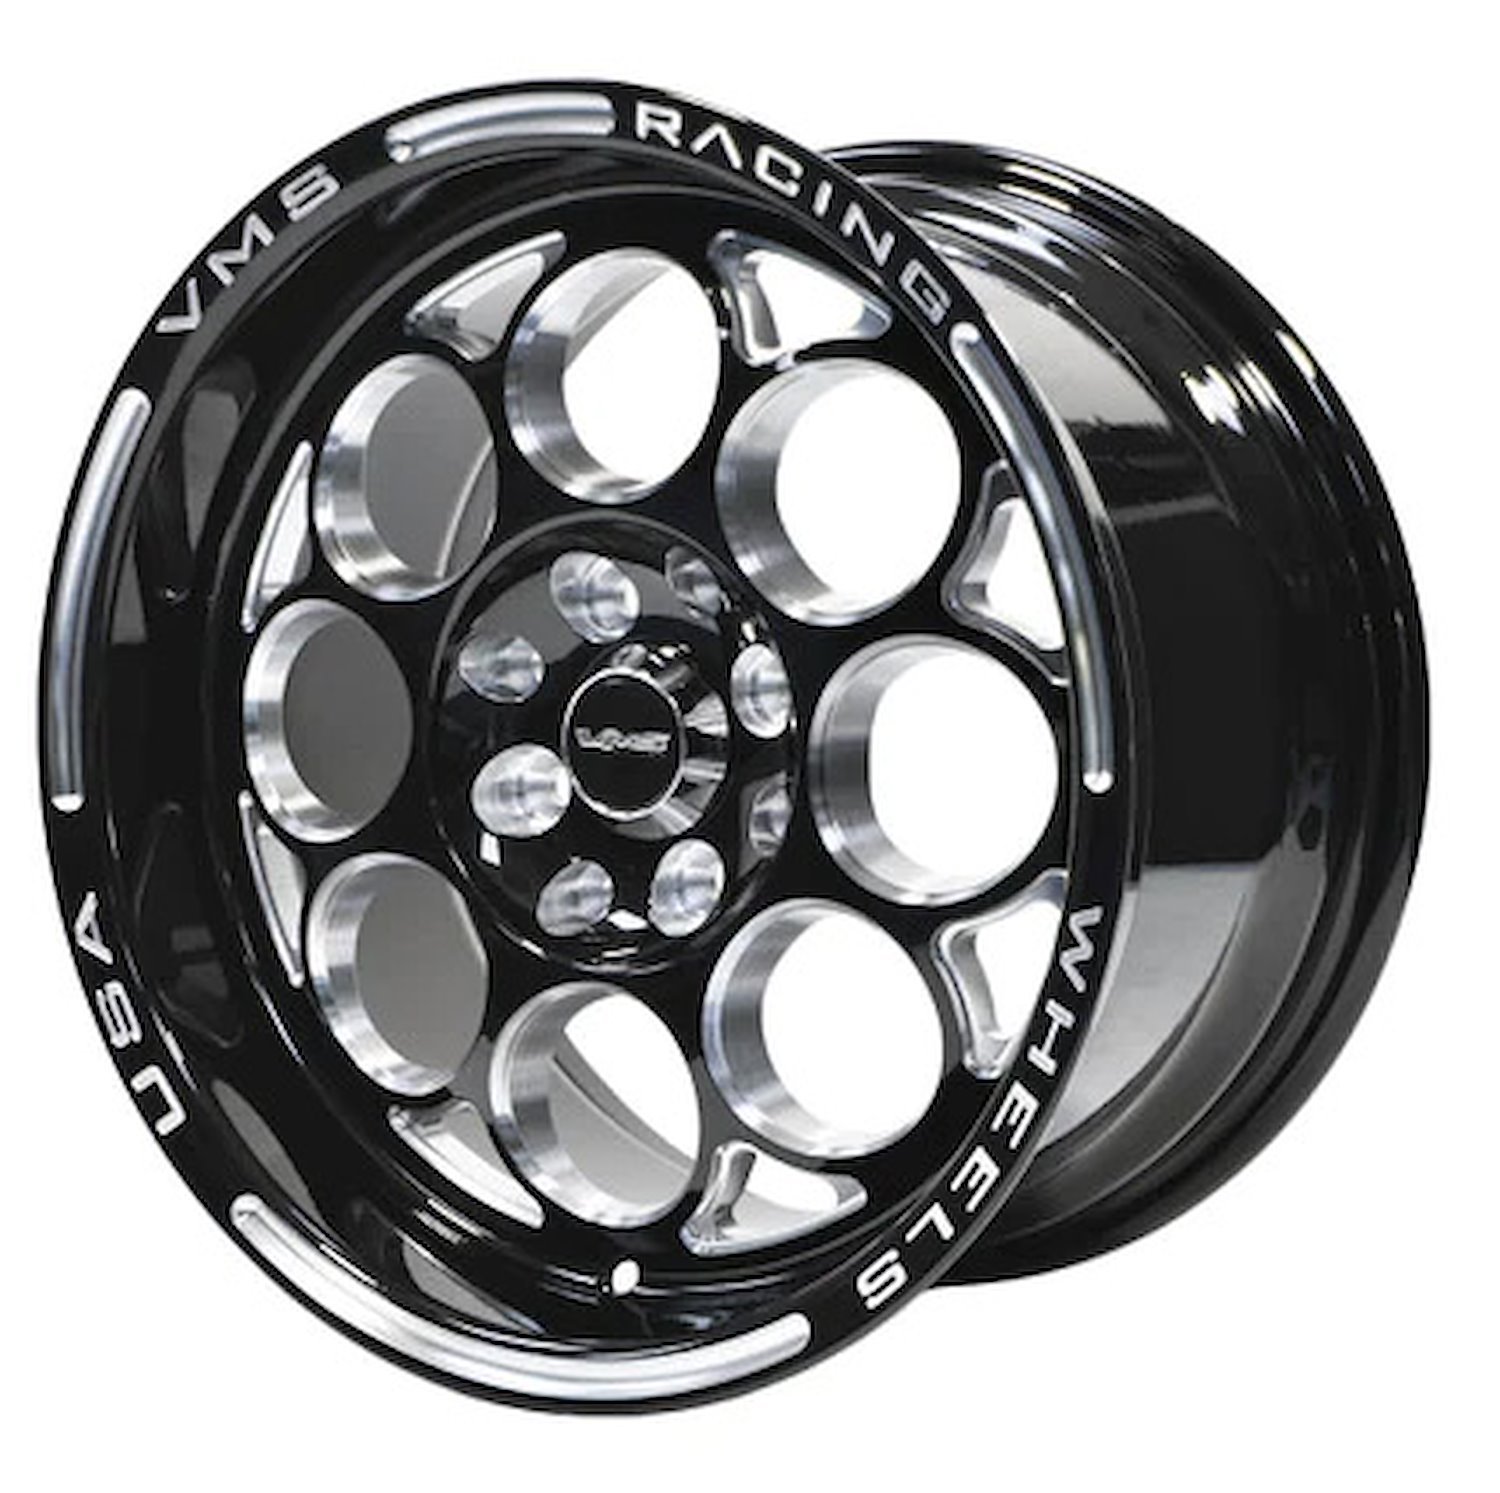 VWMO019 Modulo Wheel, Size: 15" x 8", Bolt Pattern: 5 x 100 mm & 5 x 4 3/4" (120.65 mm) [Finish: Gloss Black Milled]